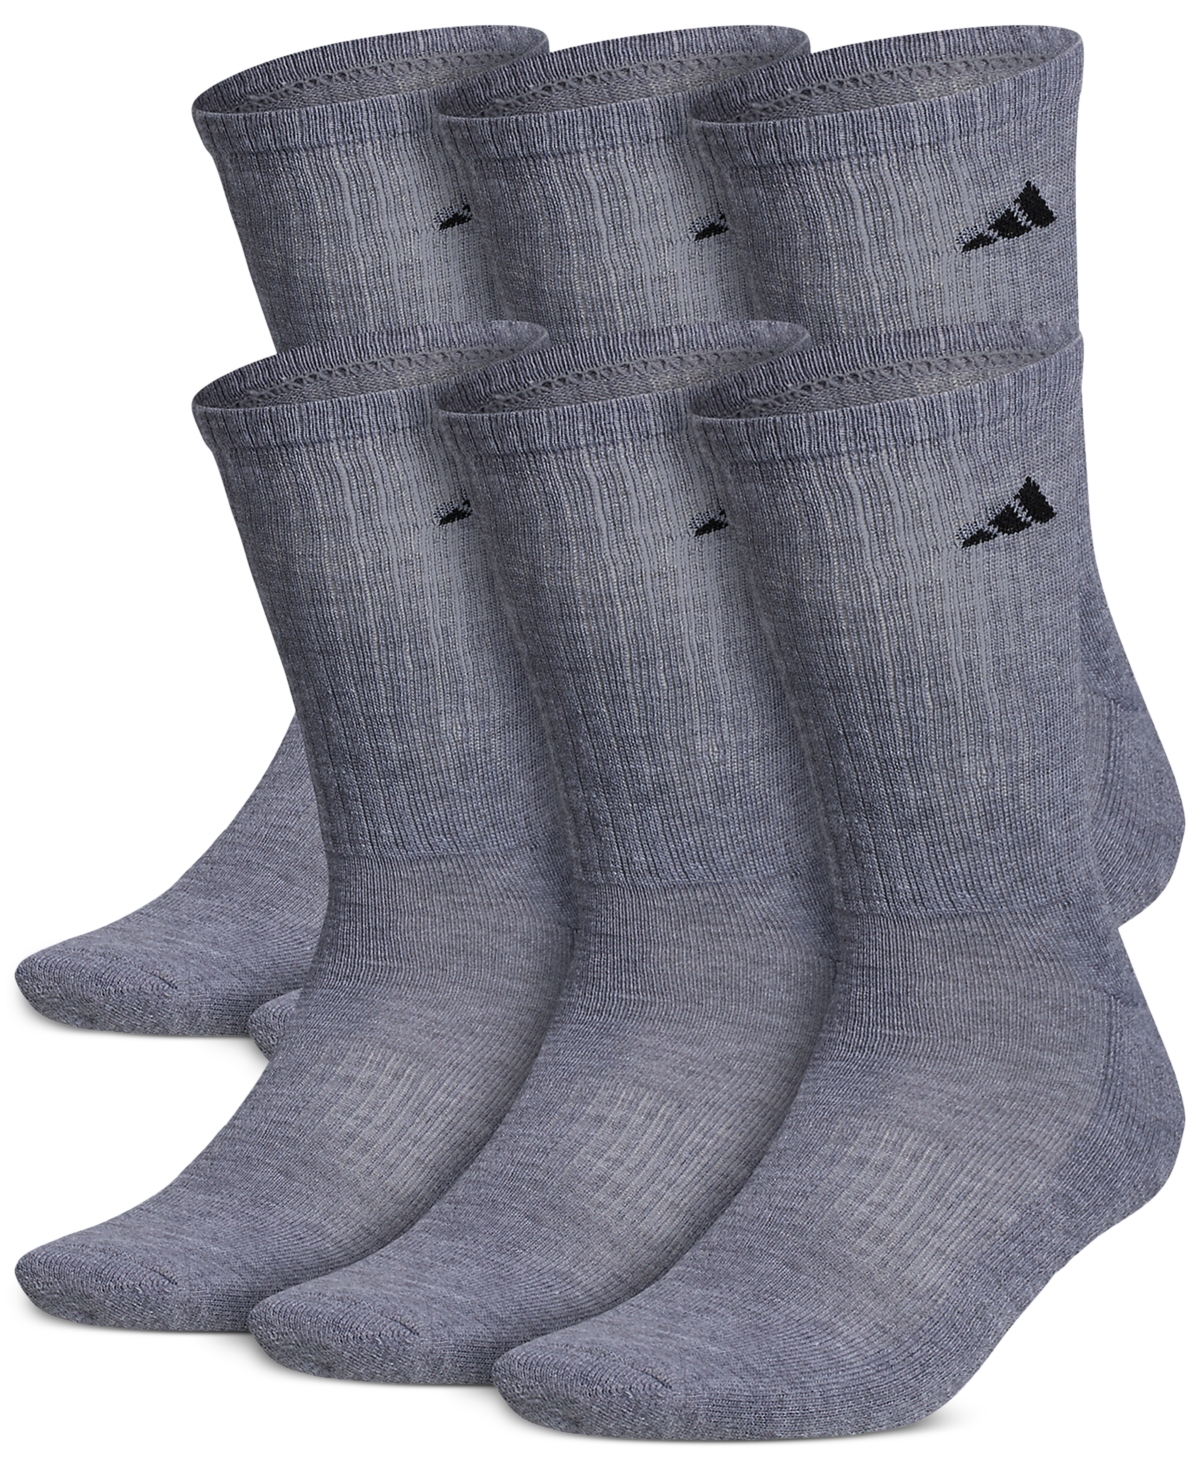 Men's Cushioned Athletic 6-Pack Crew Socks - Medium Grey